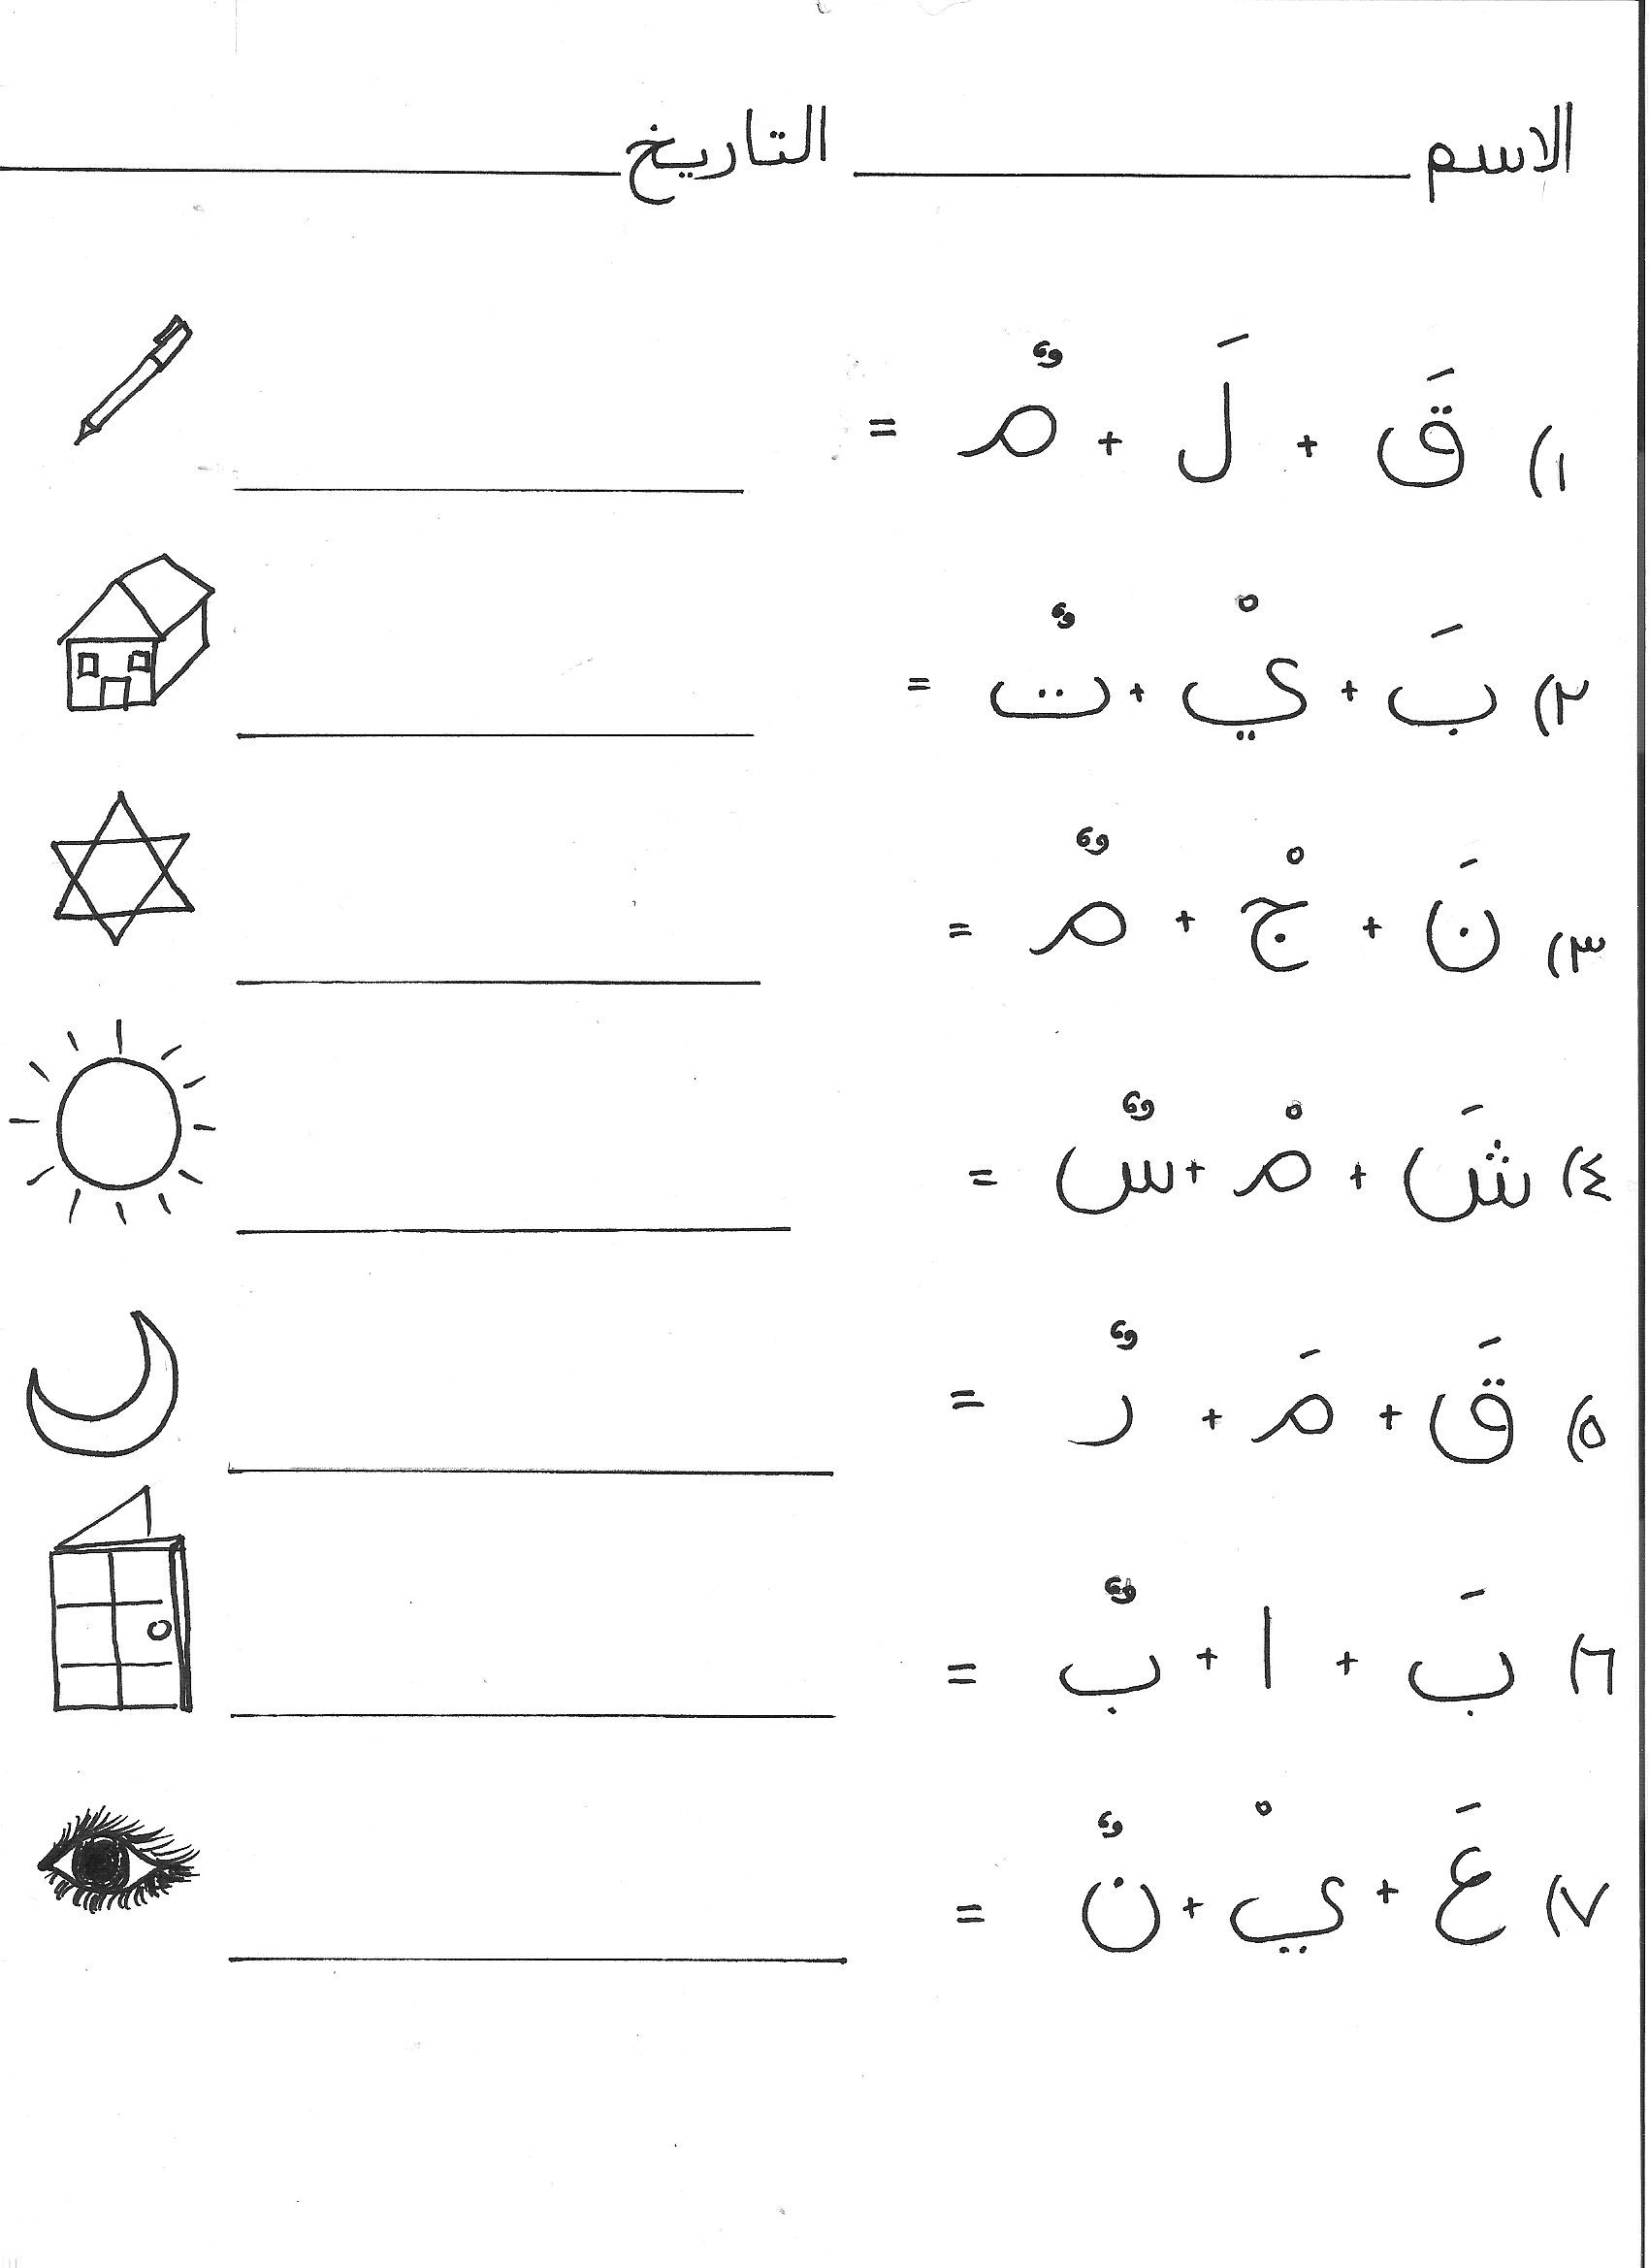 Arabic Alphabet Worksheets for Preschoolers Joining Letters to Make Words Funarabicworksheets